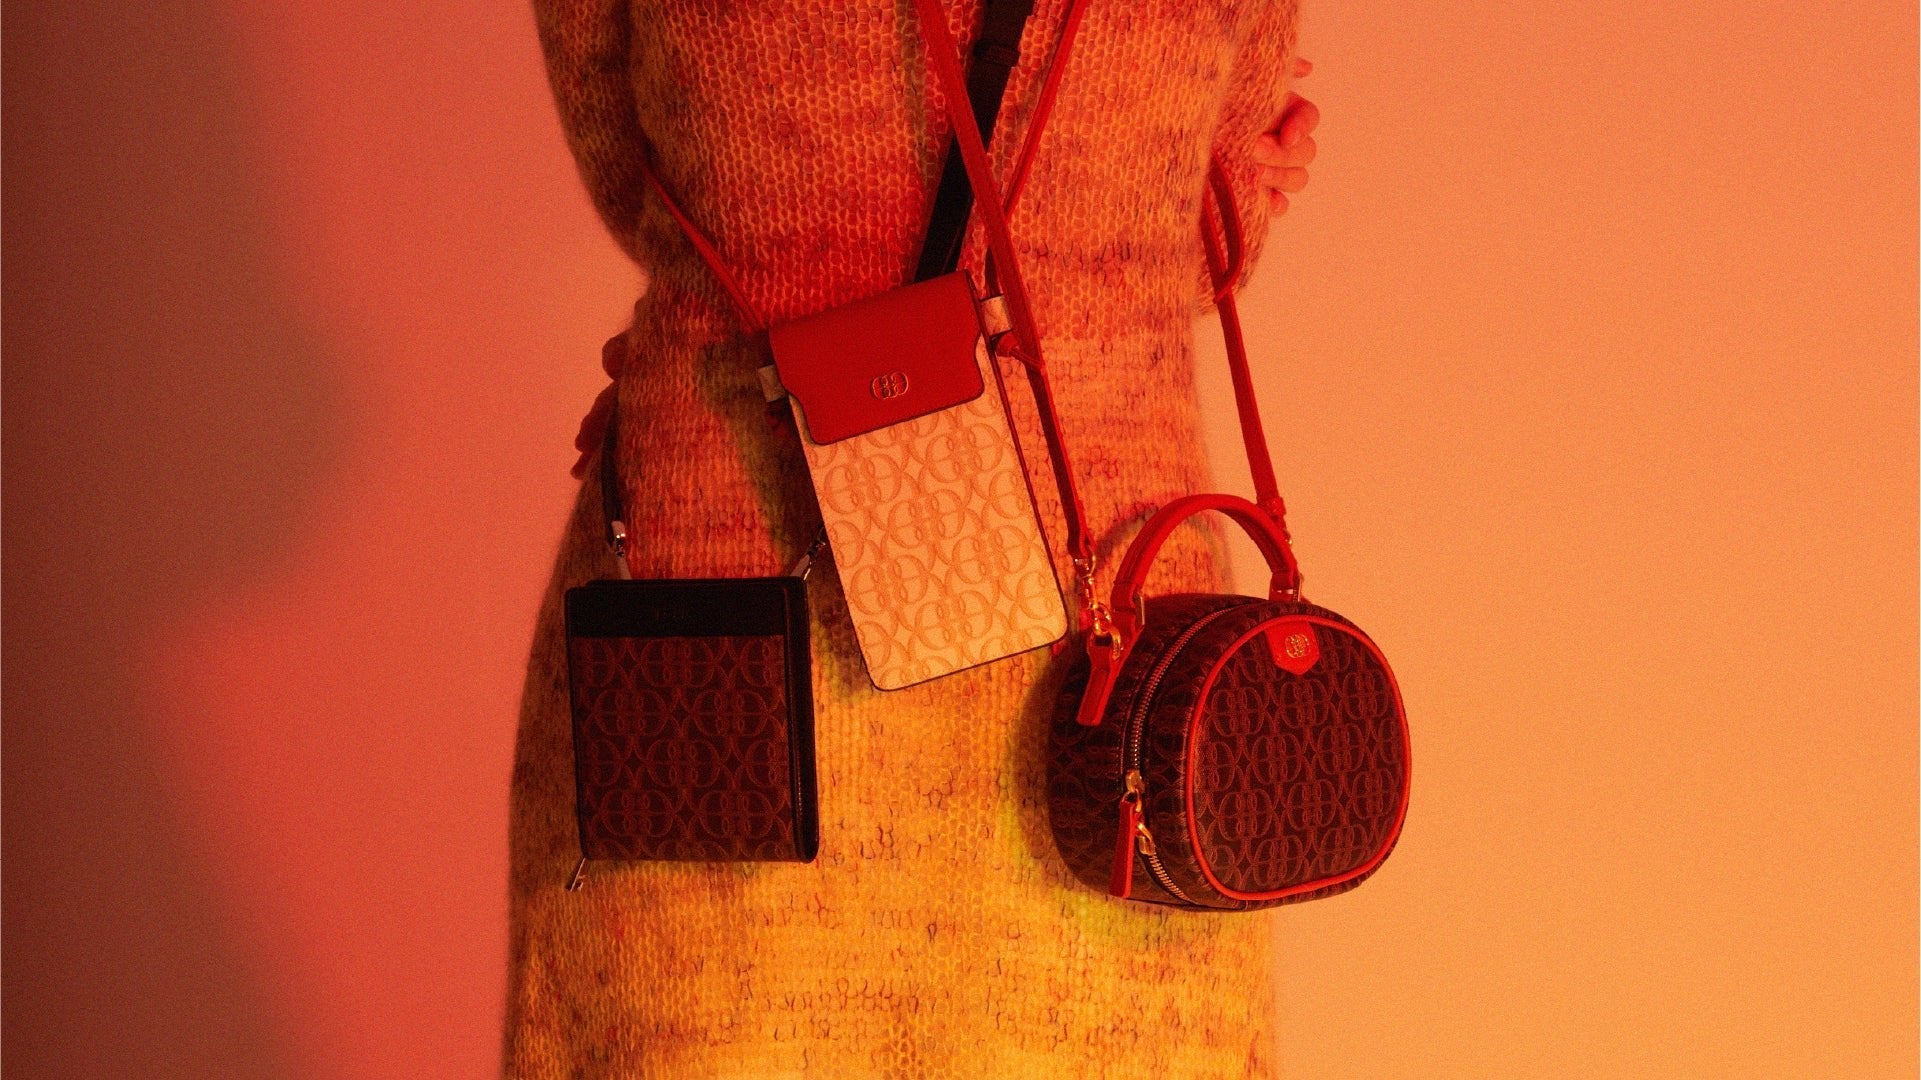 Bonia Dark Yellow Miley Monogram Women's Bag with Adjustable